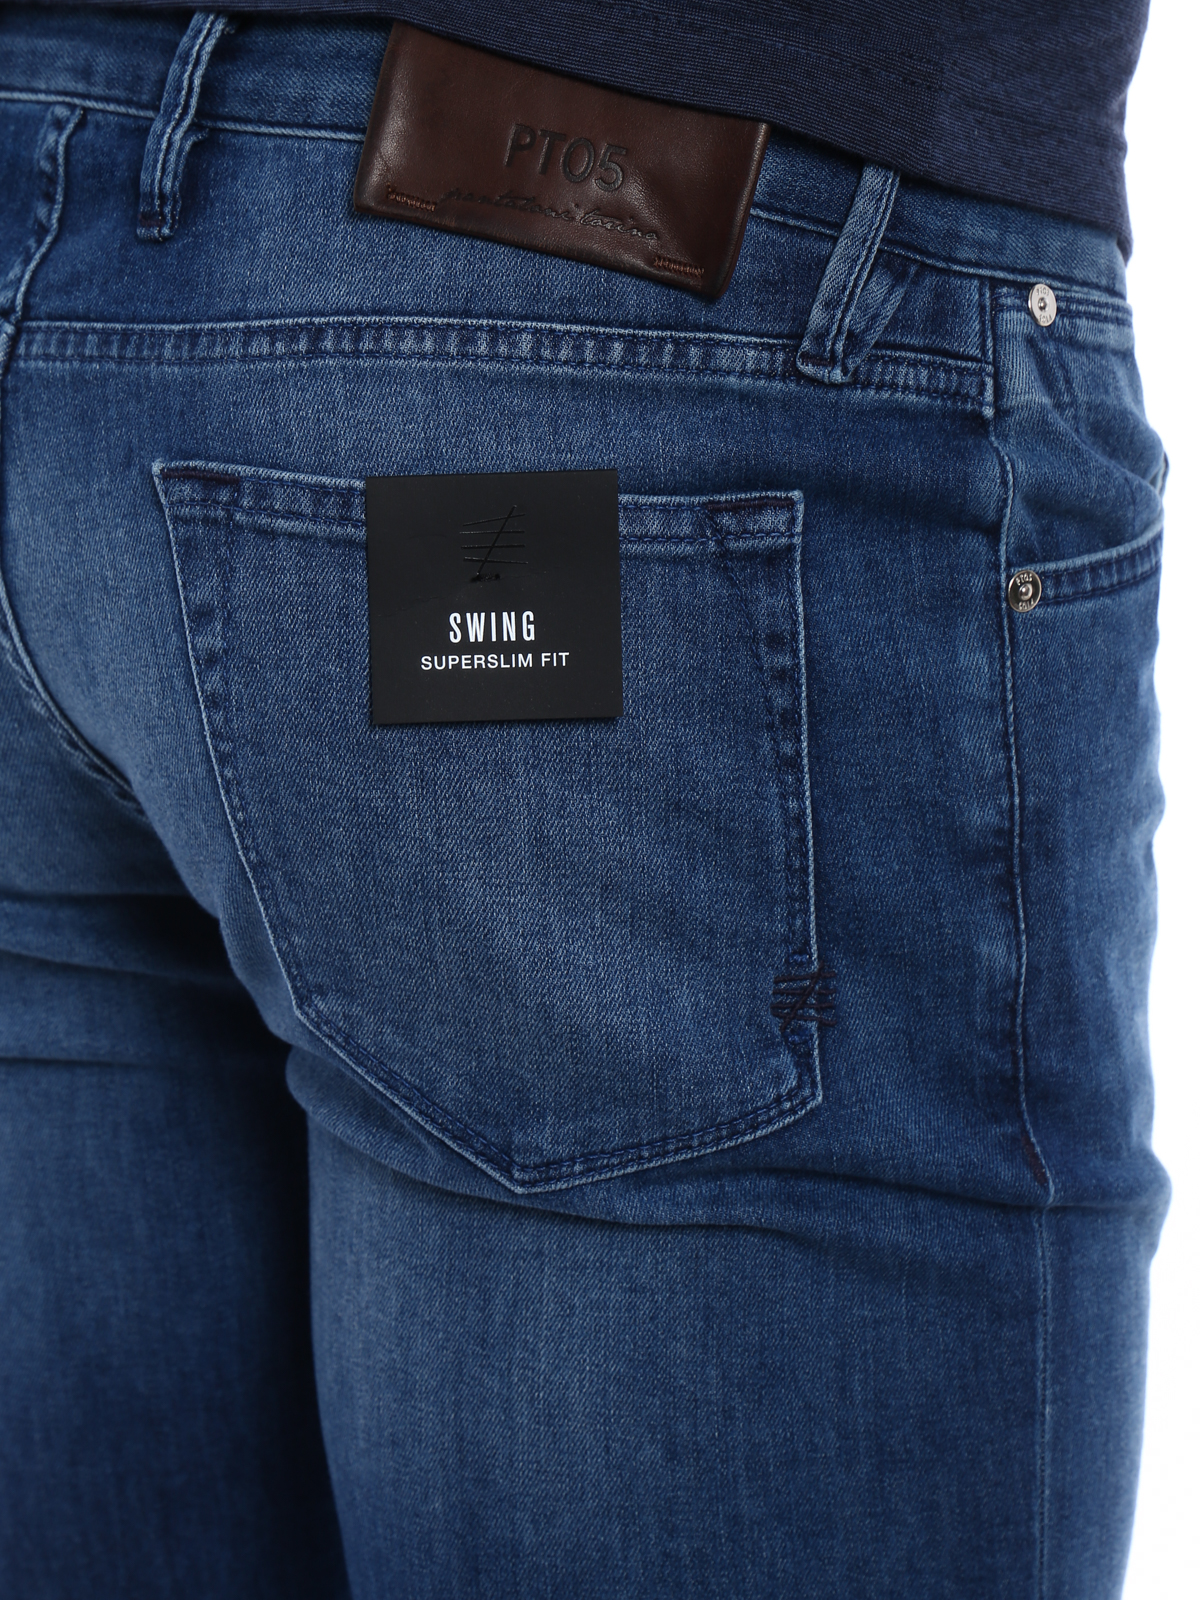 low rise jeans online